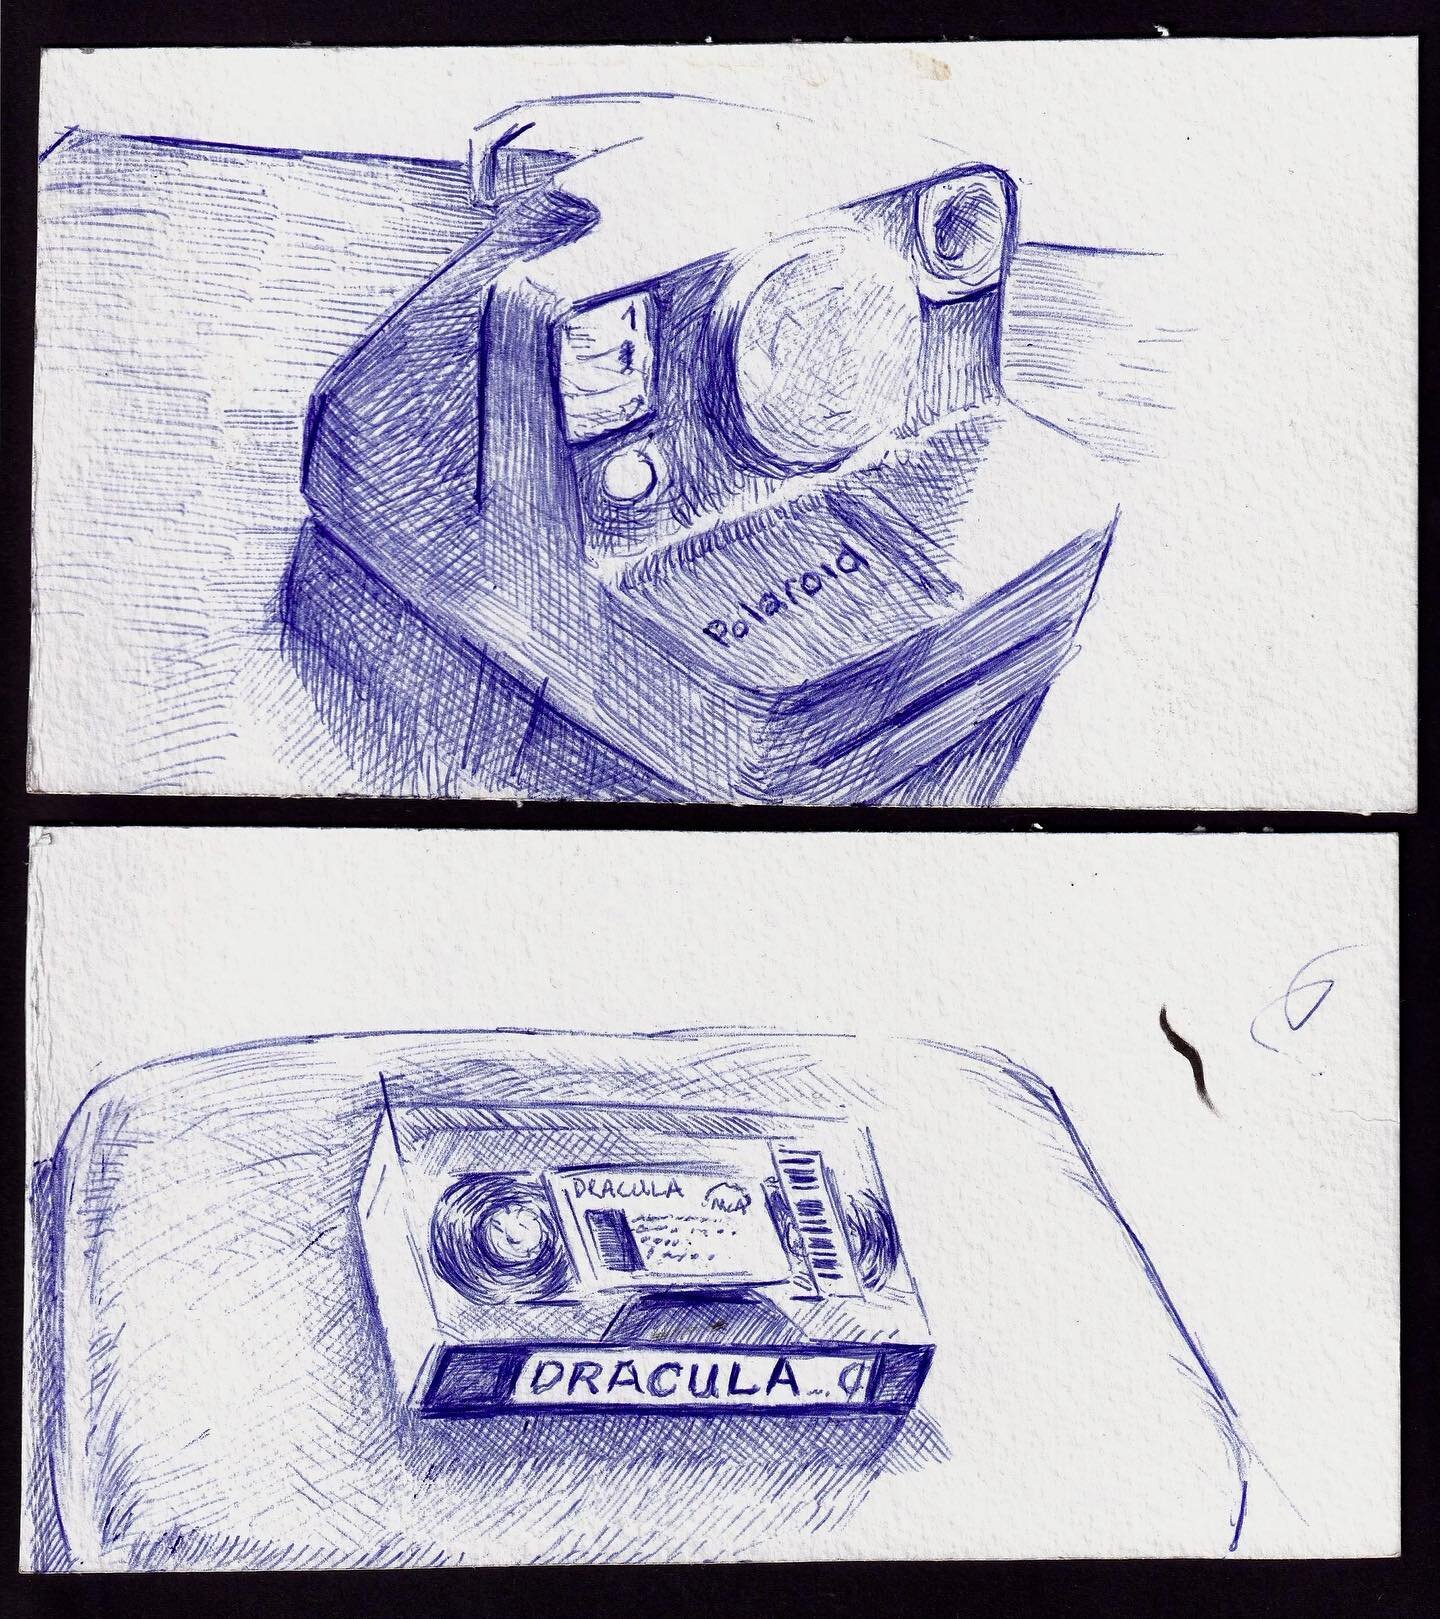 Polaroid and VHS
#drawing #freehanddrawing #ballpoint #pen #watercolorpaper #sketch #dracula #analog #film #vampire #lens #bekindrewind #art #artwork #shadows